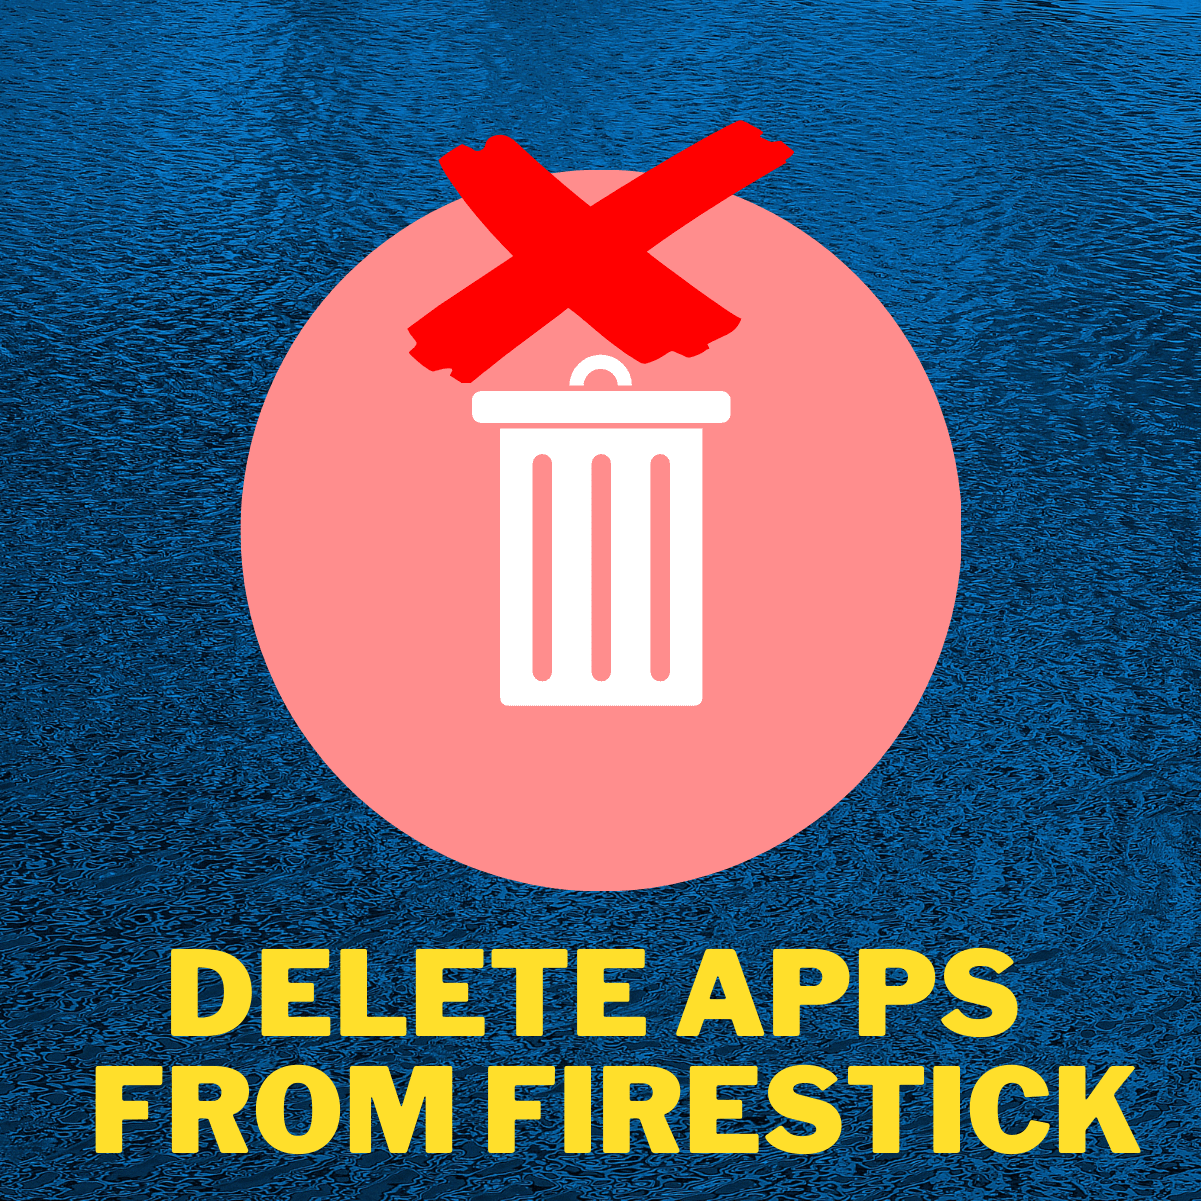 uninstall apps on firestick